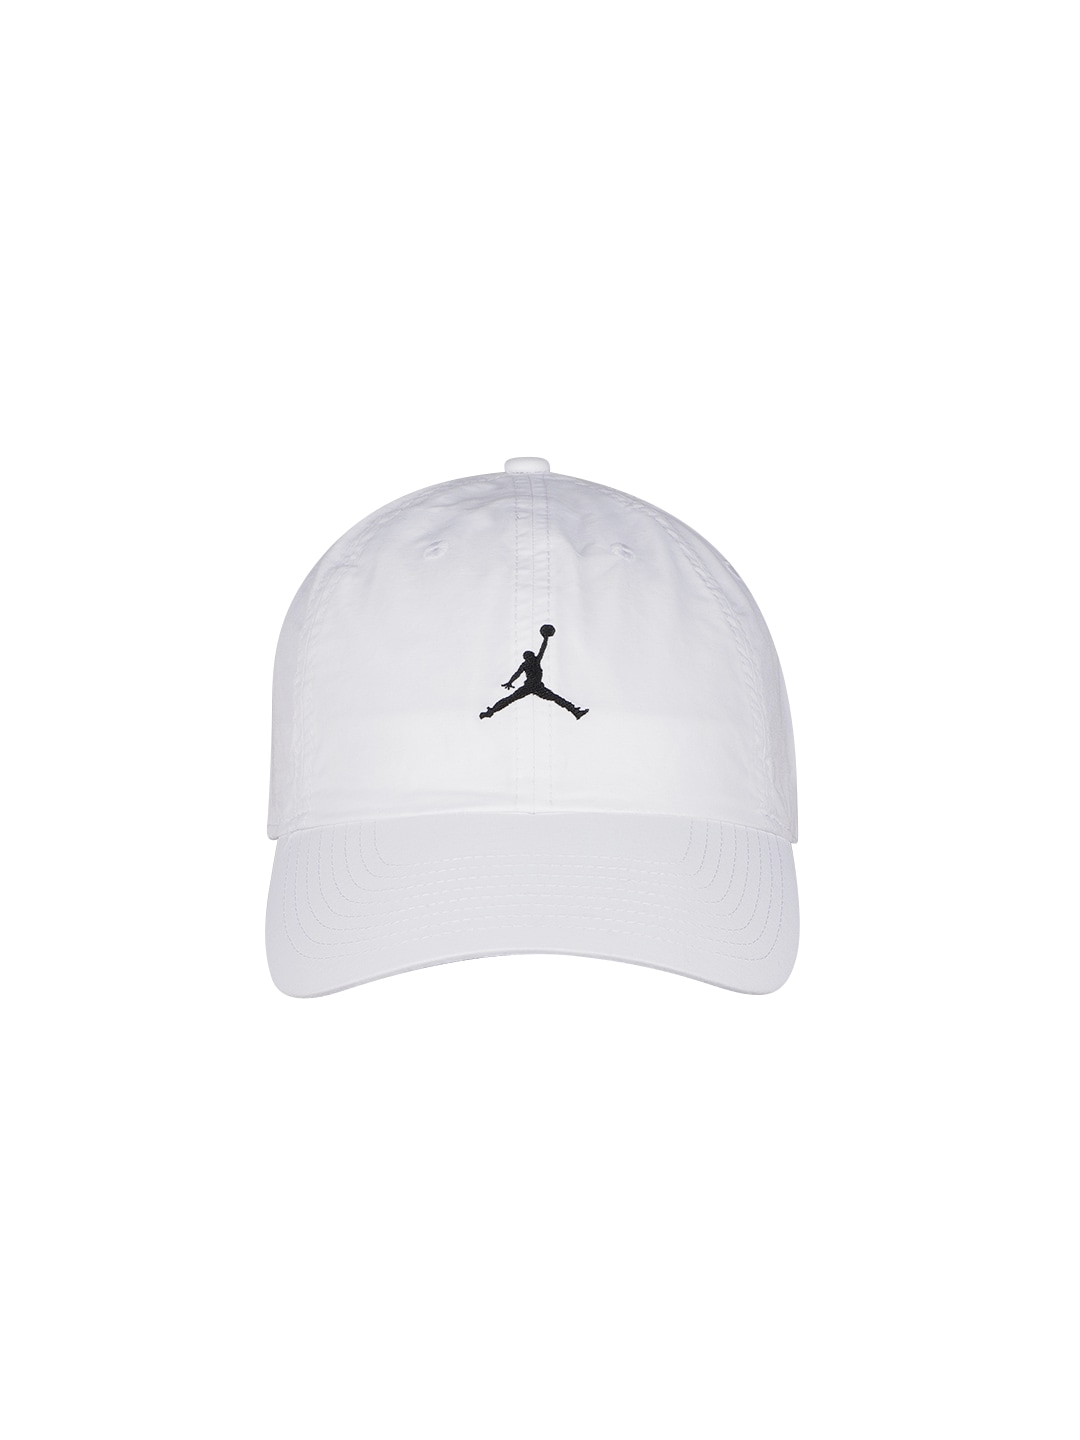 Nike Unisex White Jordan H86 Baseball Cap Price in India